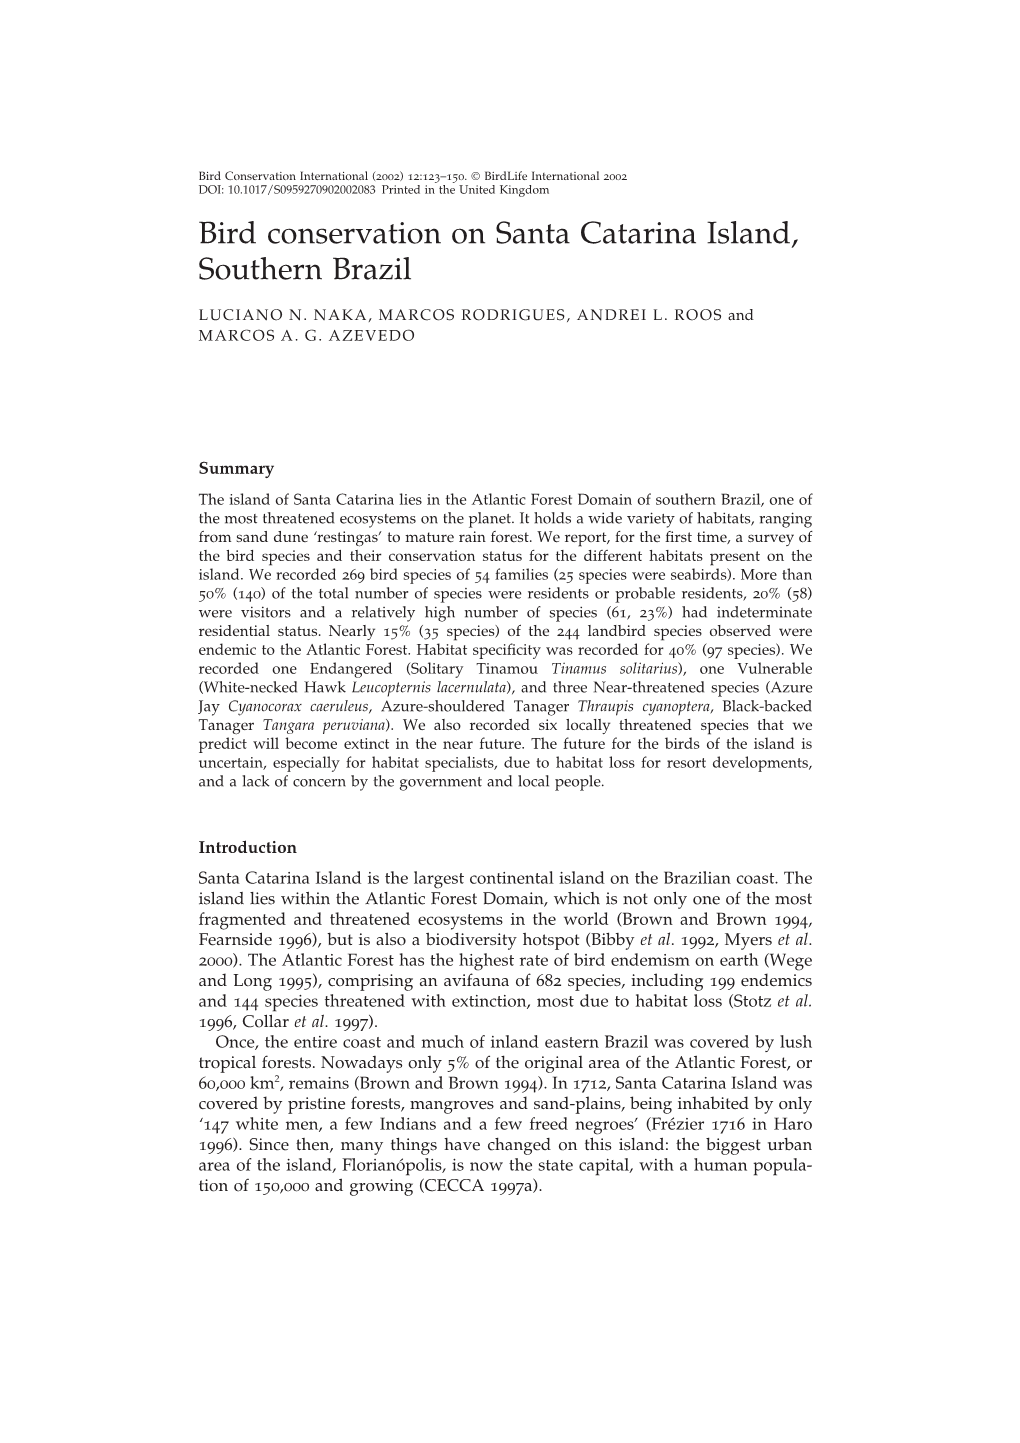 Bird Conservation on Santa Catarina Island, Southern Brazil